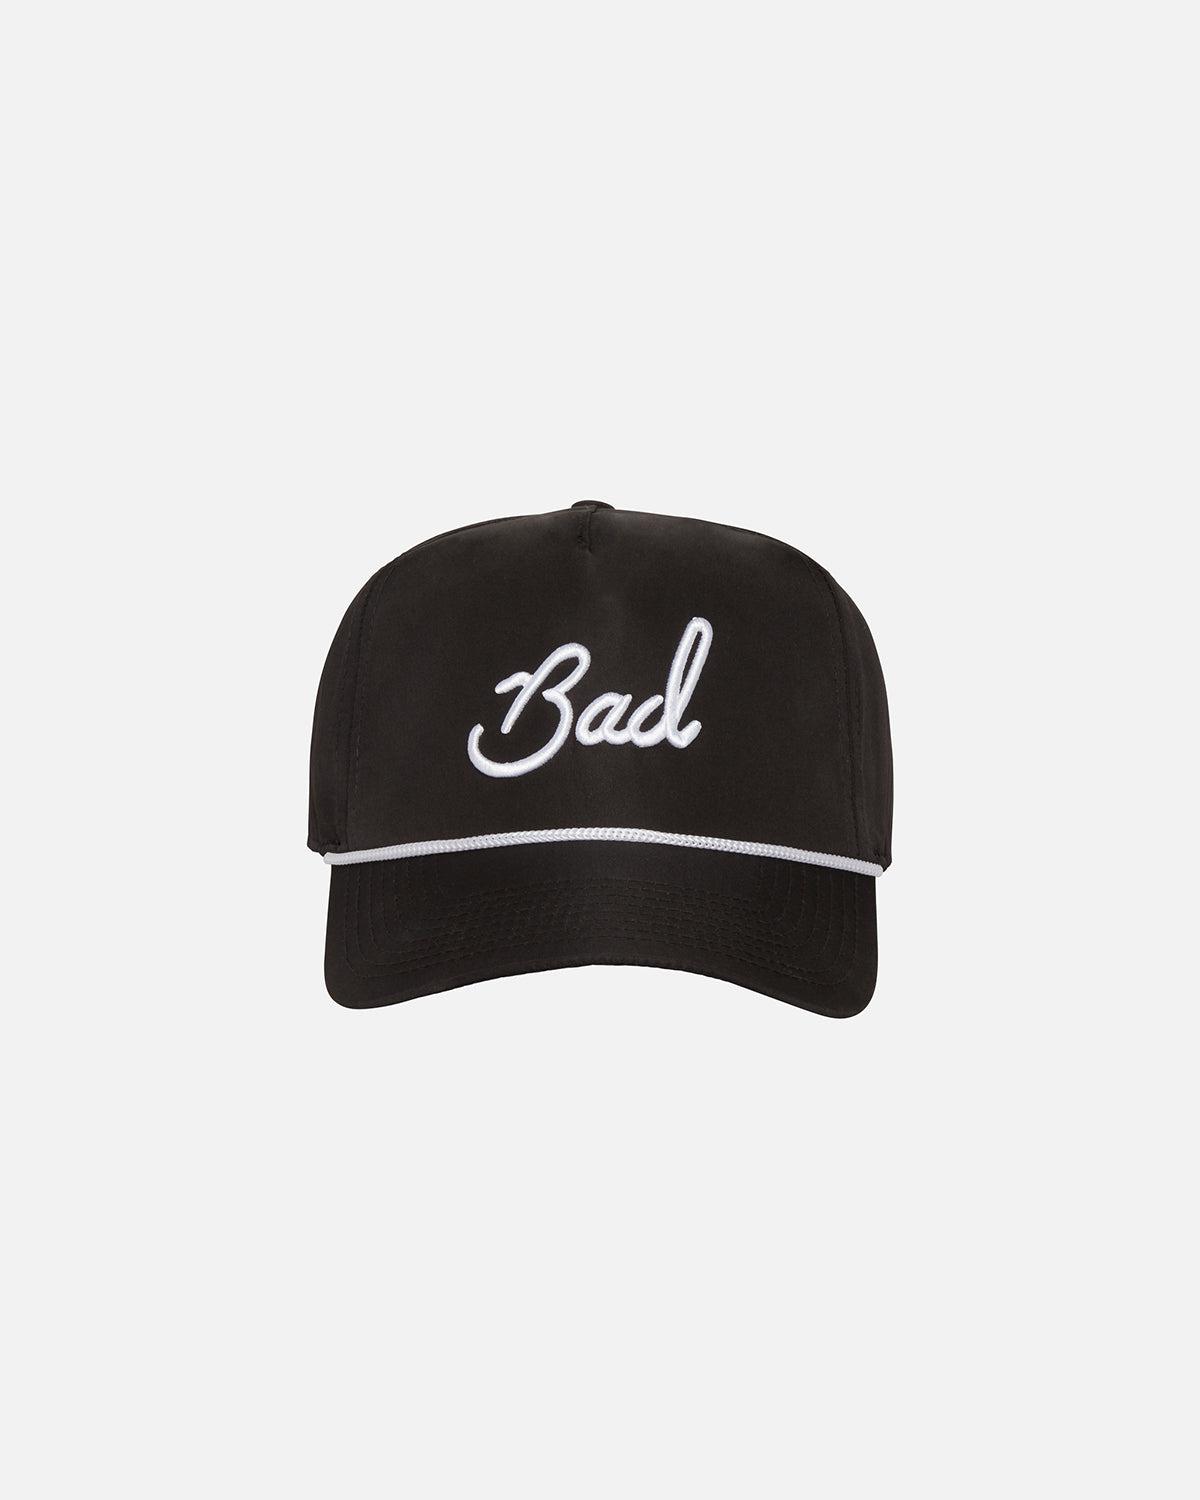 Bad Rope Golf Hat - Black